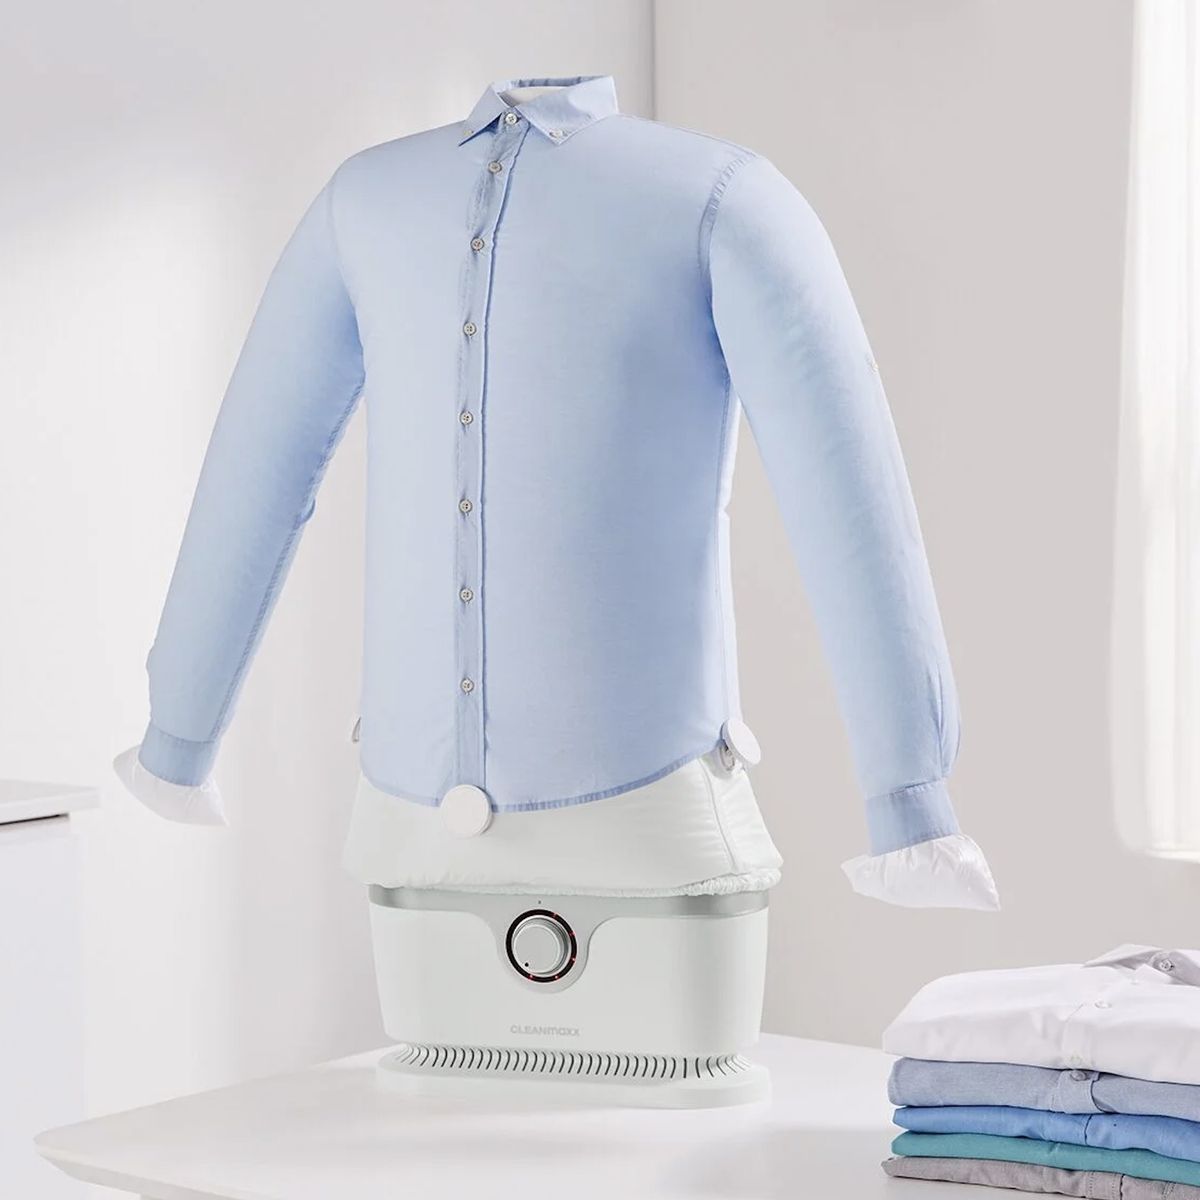 robot plancha camisas – Compra robot plancha camisas con envío